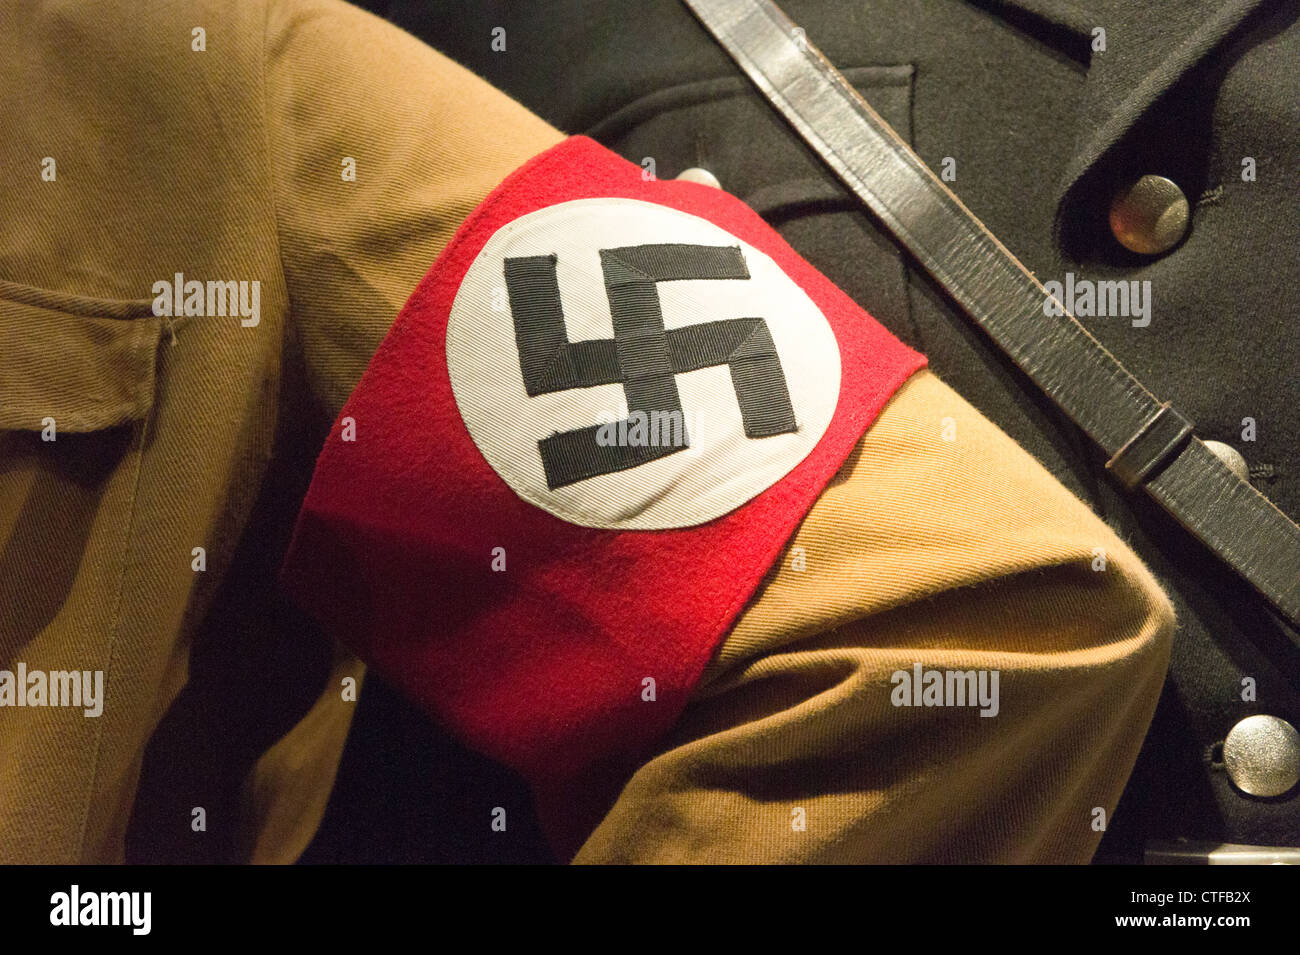 Nazi swastika armband on brownshirt uniform. Stock Photo